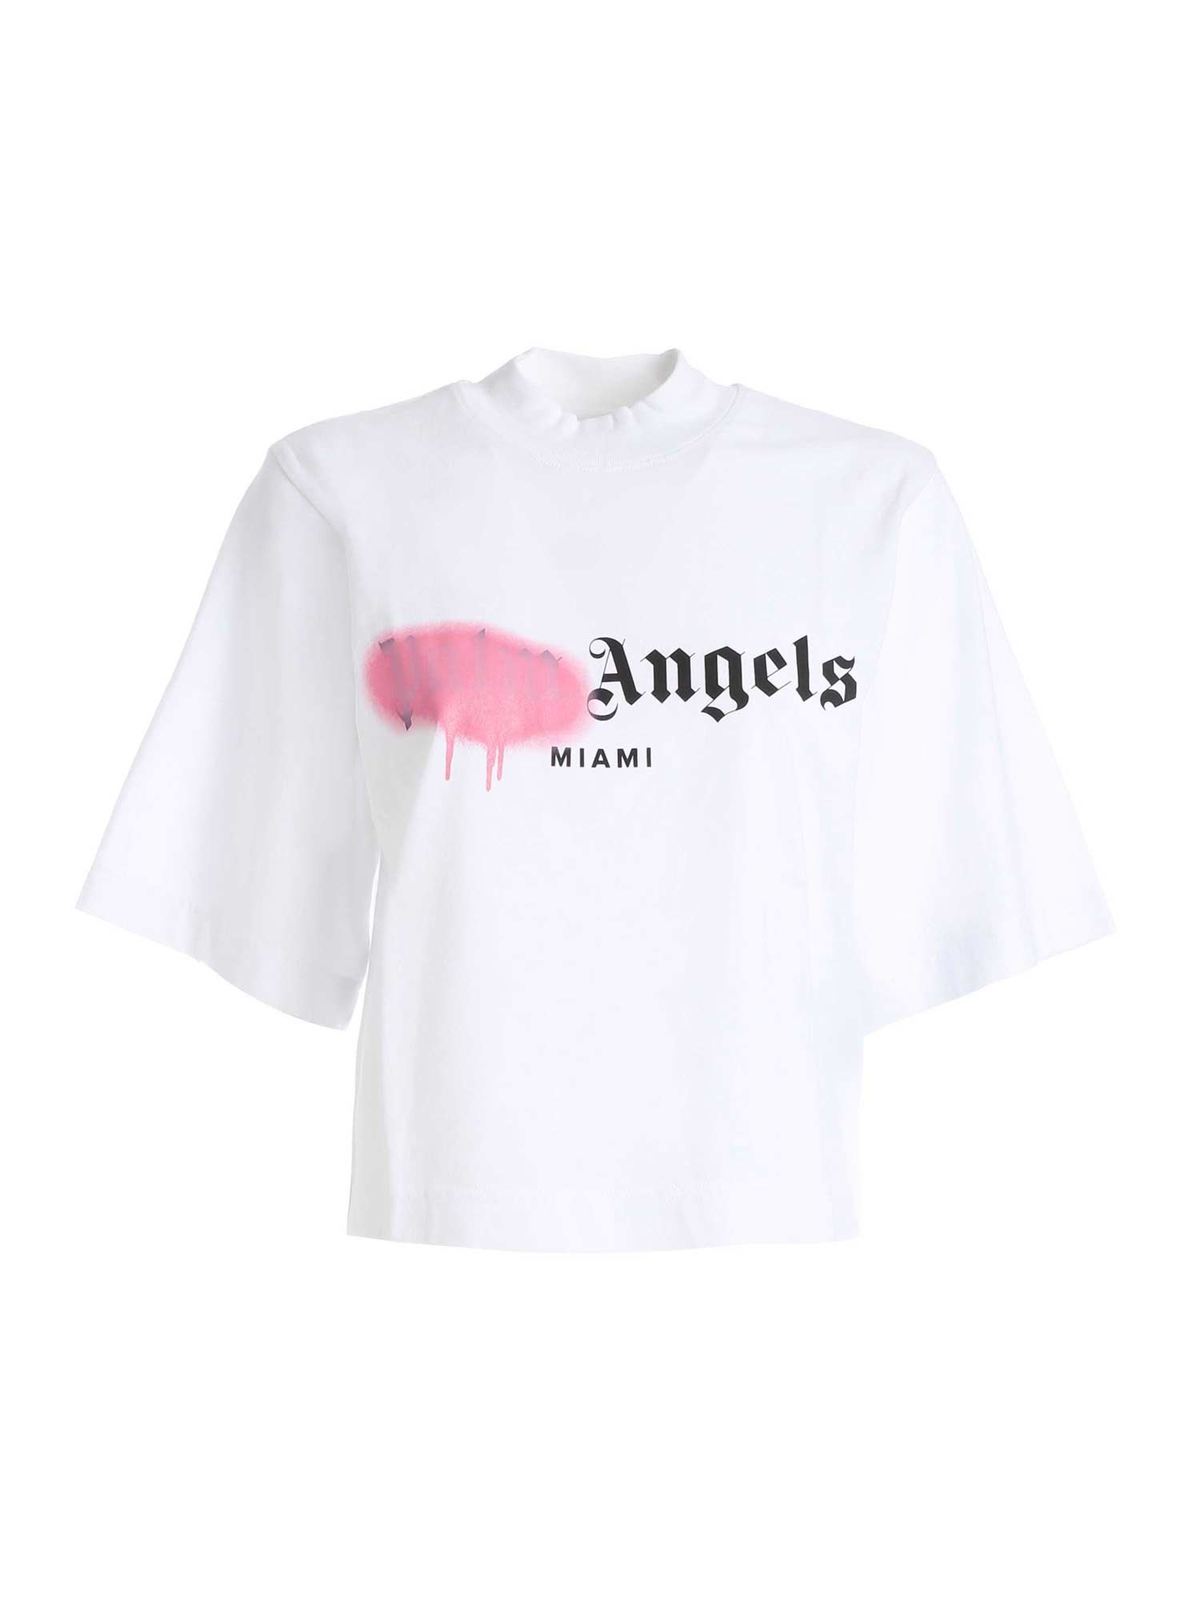 palm angels cropped logo t shirt